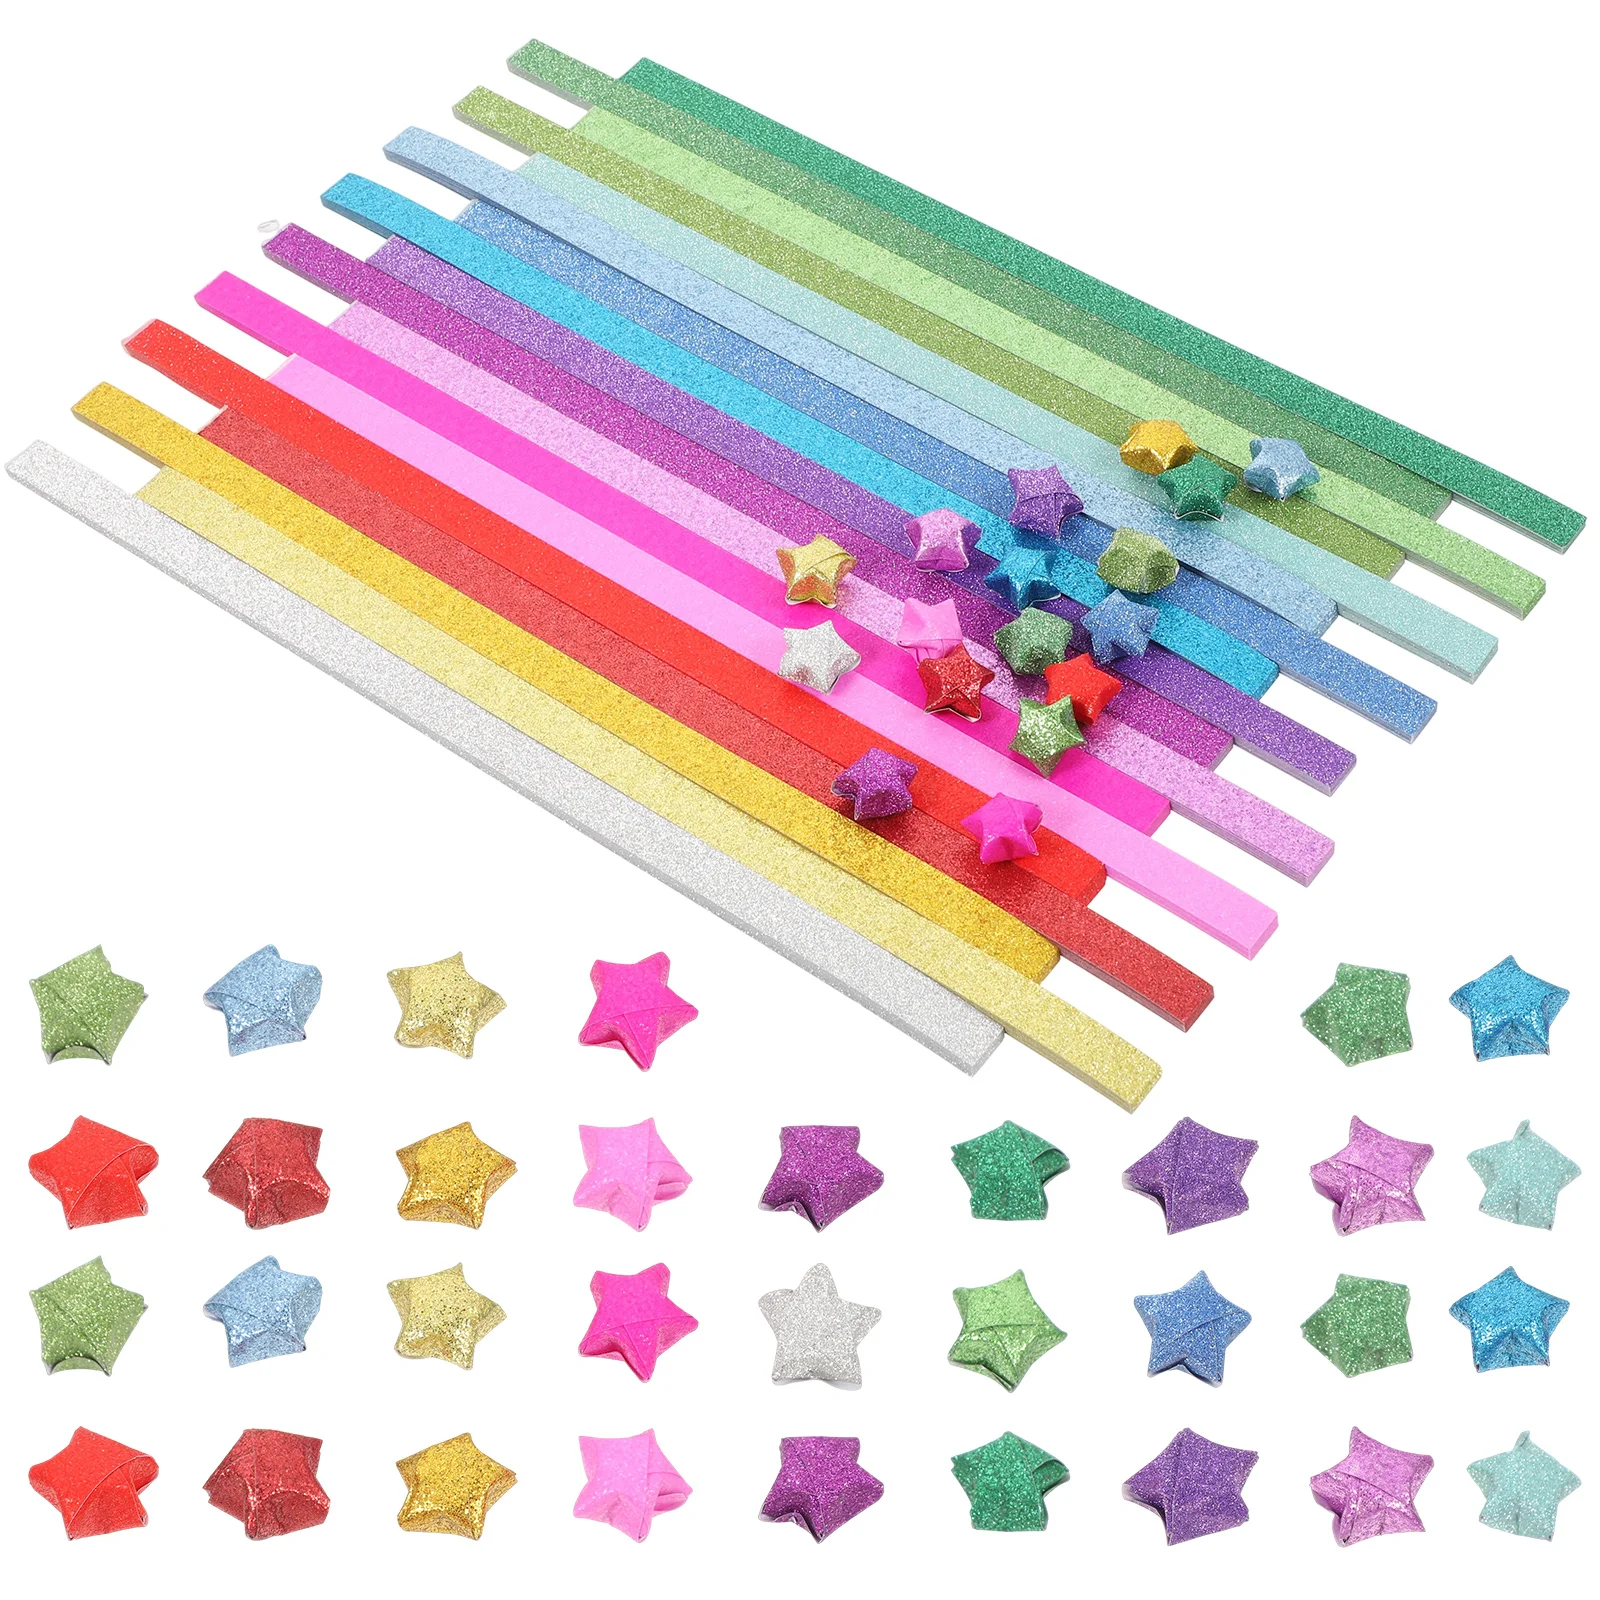 

720 Sheets Glitter Folding Origami Craft Kids Glitter Origami Papers Crafts Folding Paper Star Folding Paper Kids Crafts